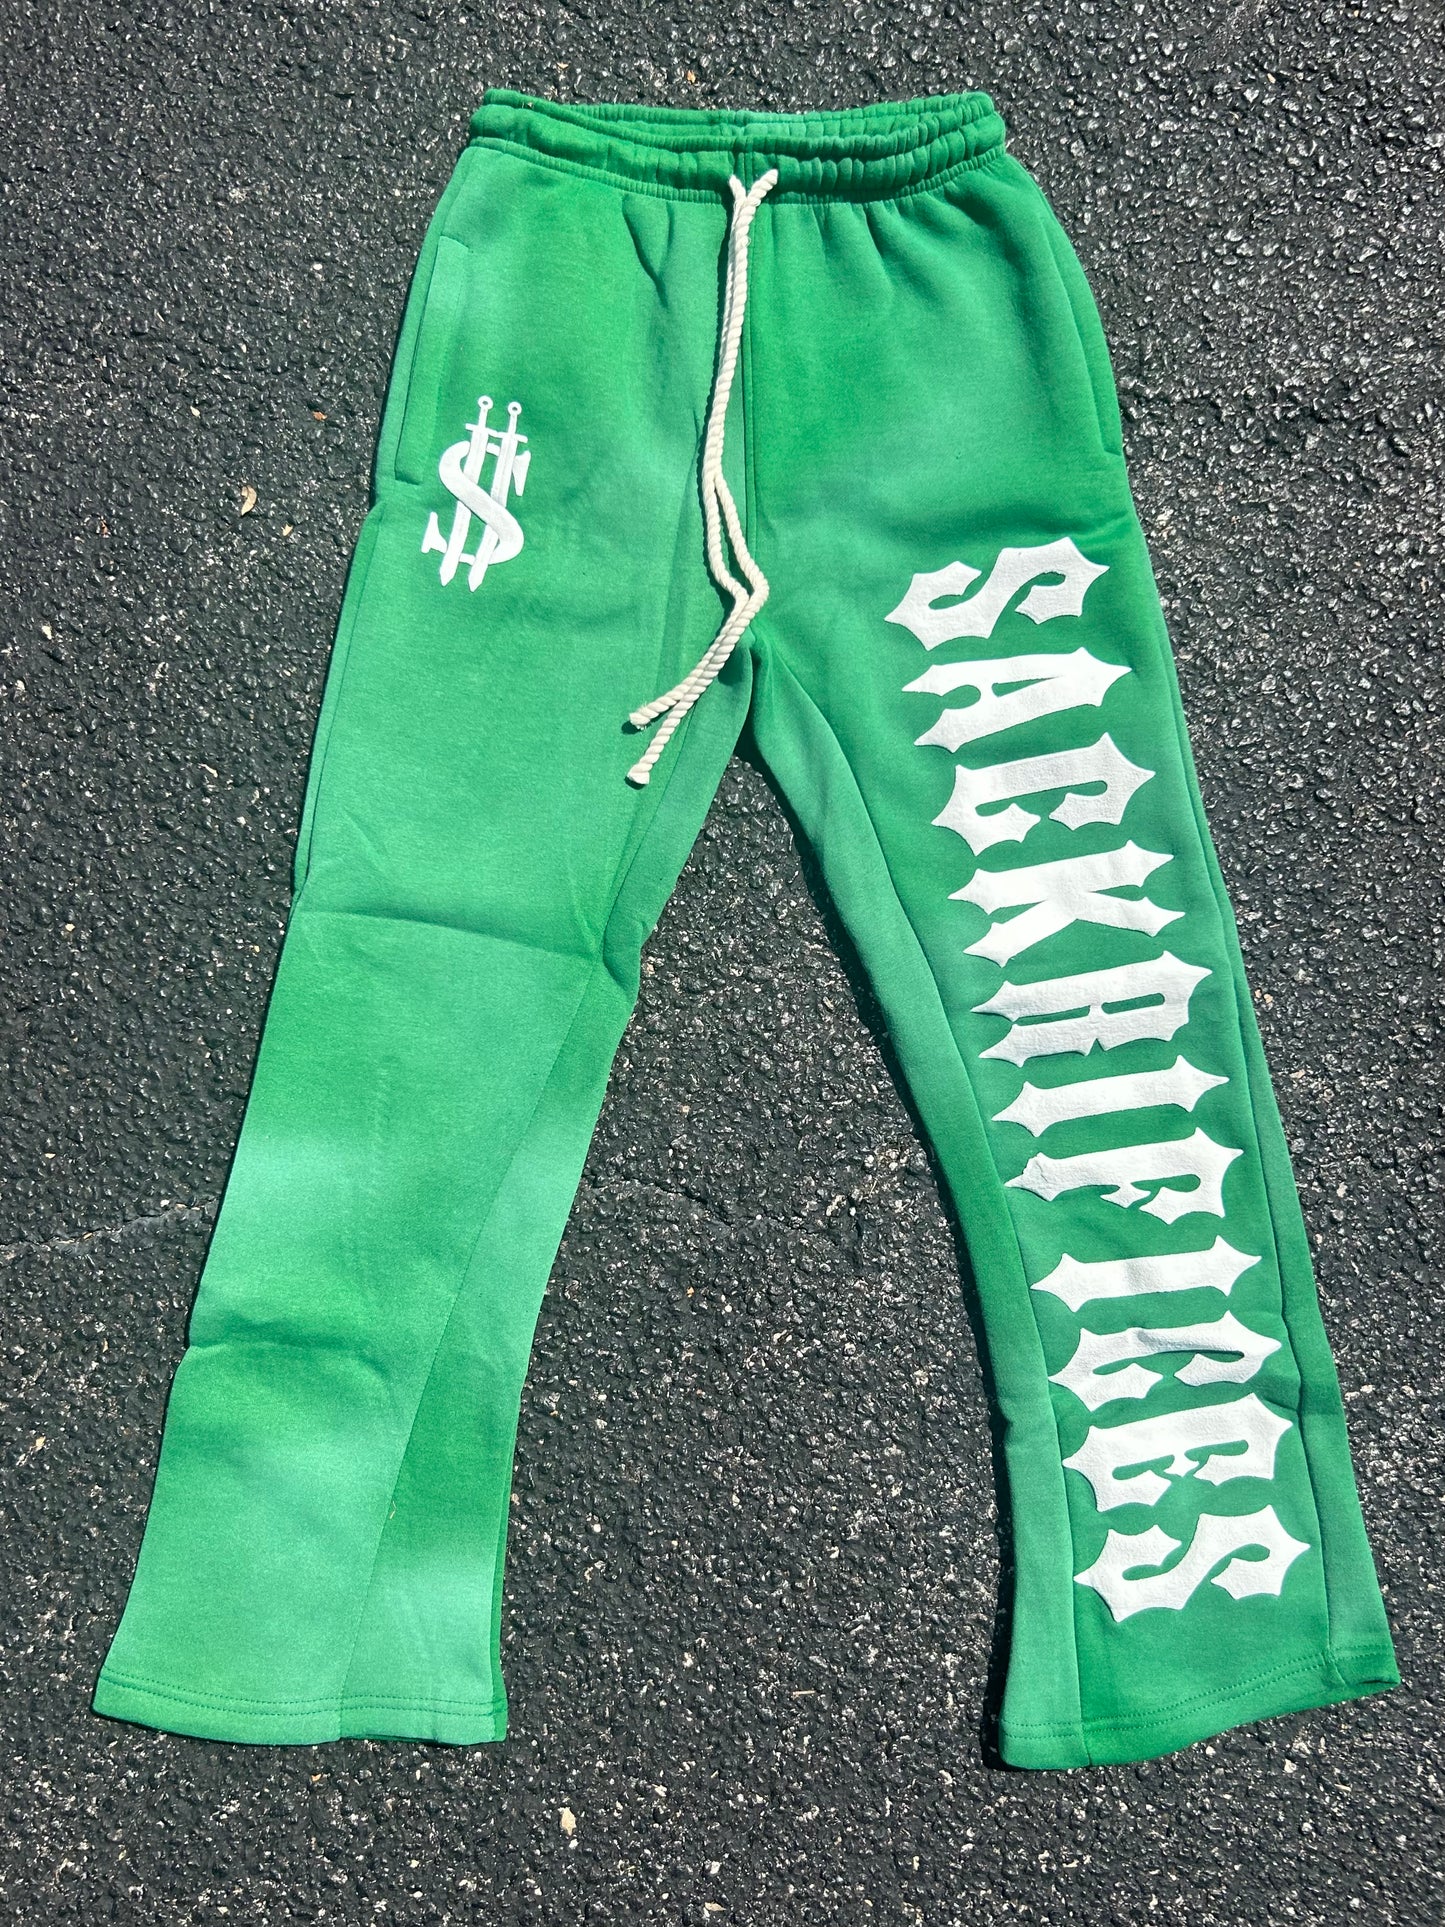 Sack Dollar V2 - Flare Sweatpants